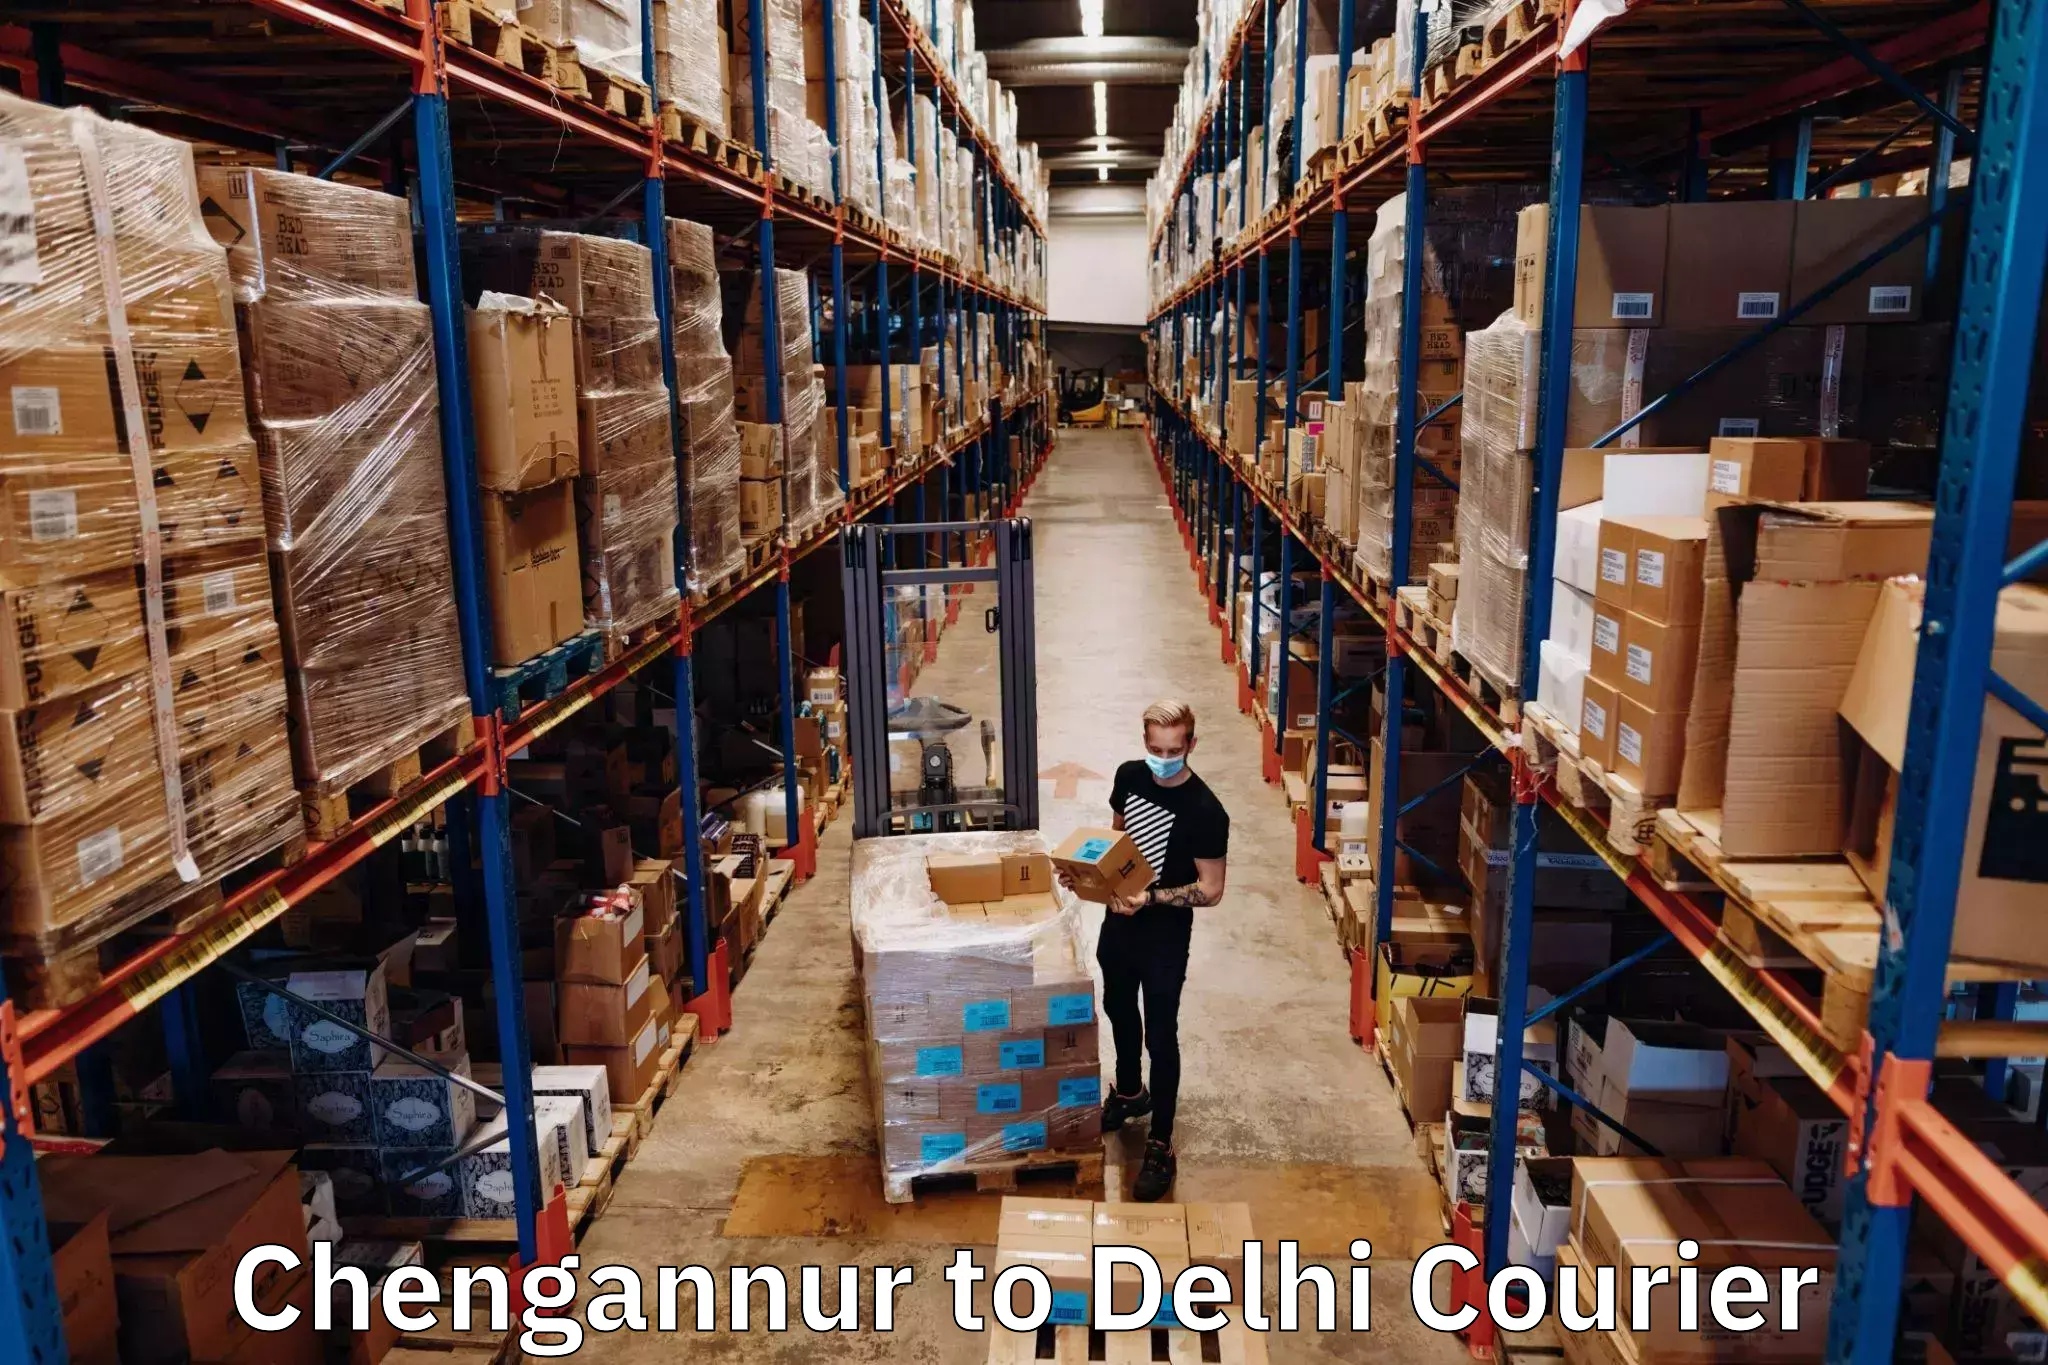 User-friendly delivery service Chengannur to Delhi